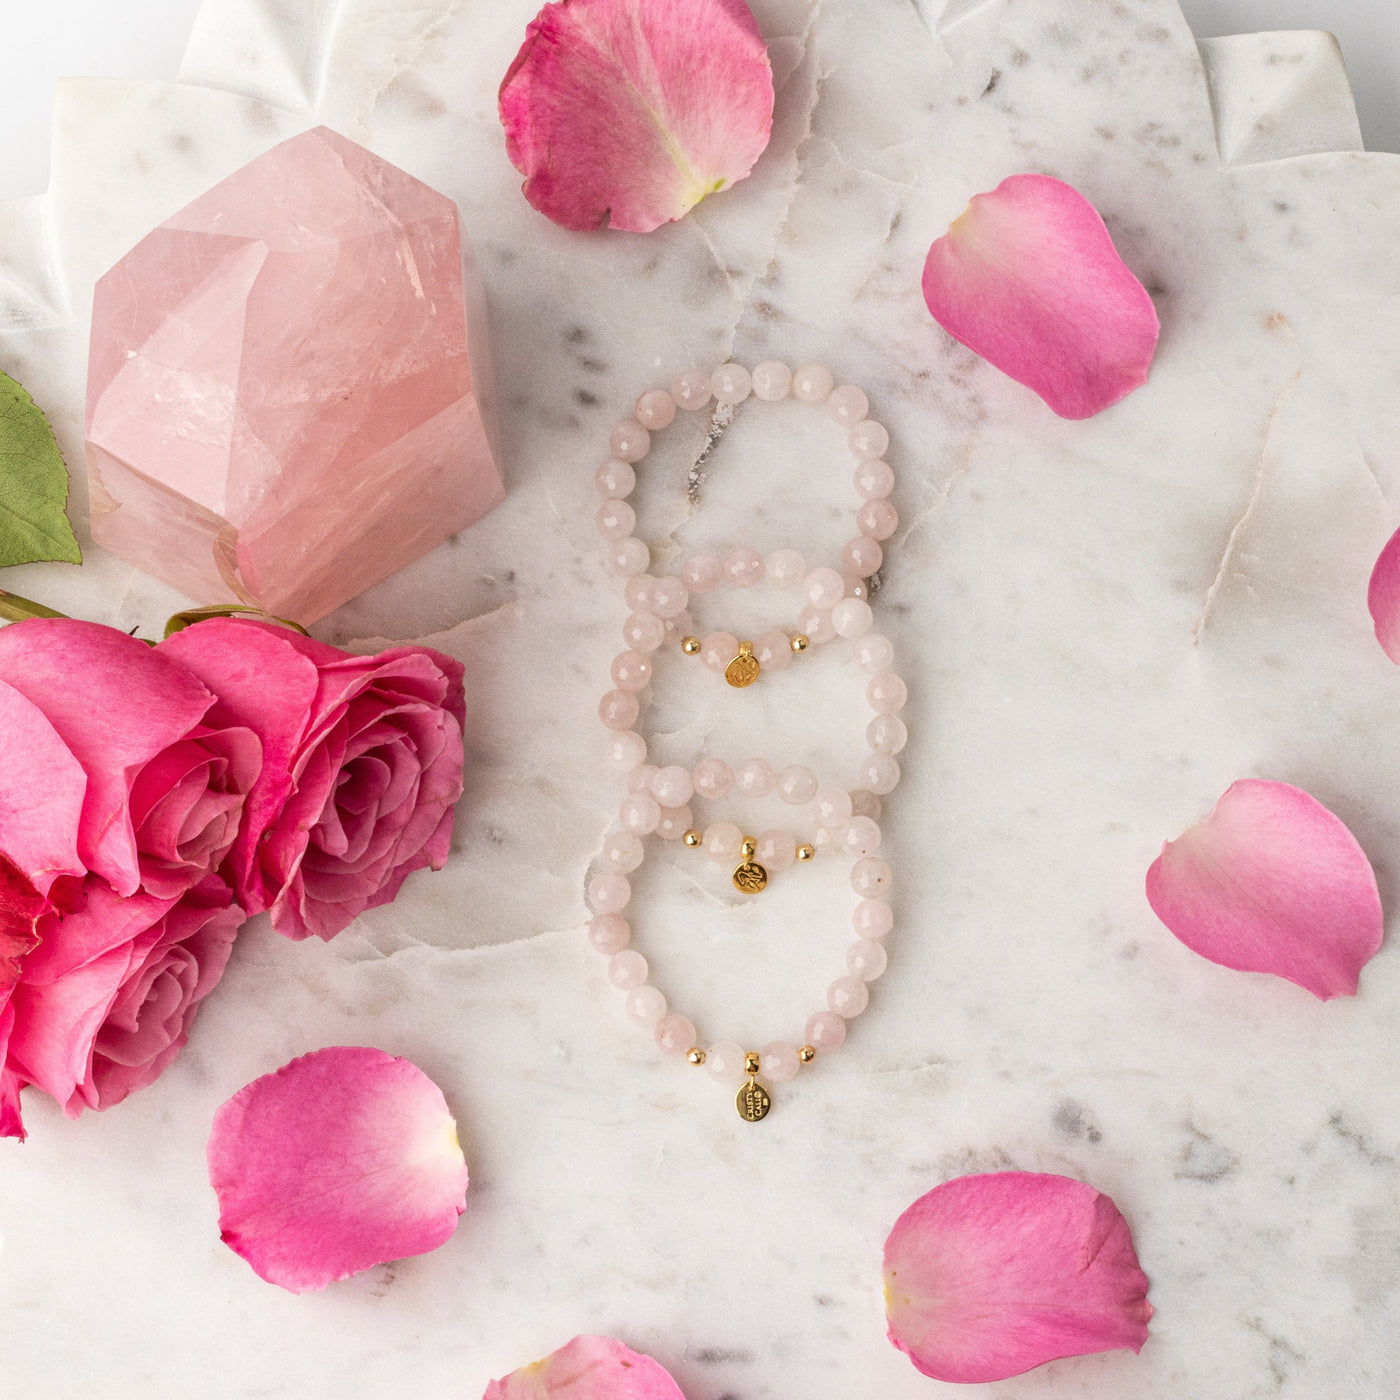 Golden Self-Love Rose Quartz Signature Stretch Bracelet